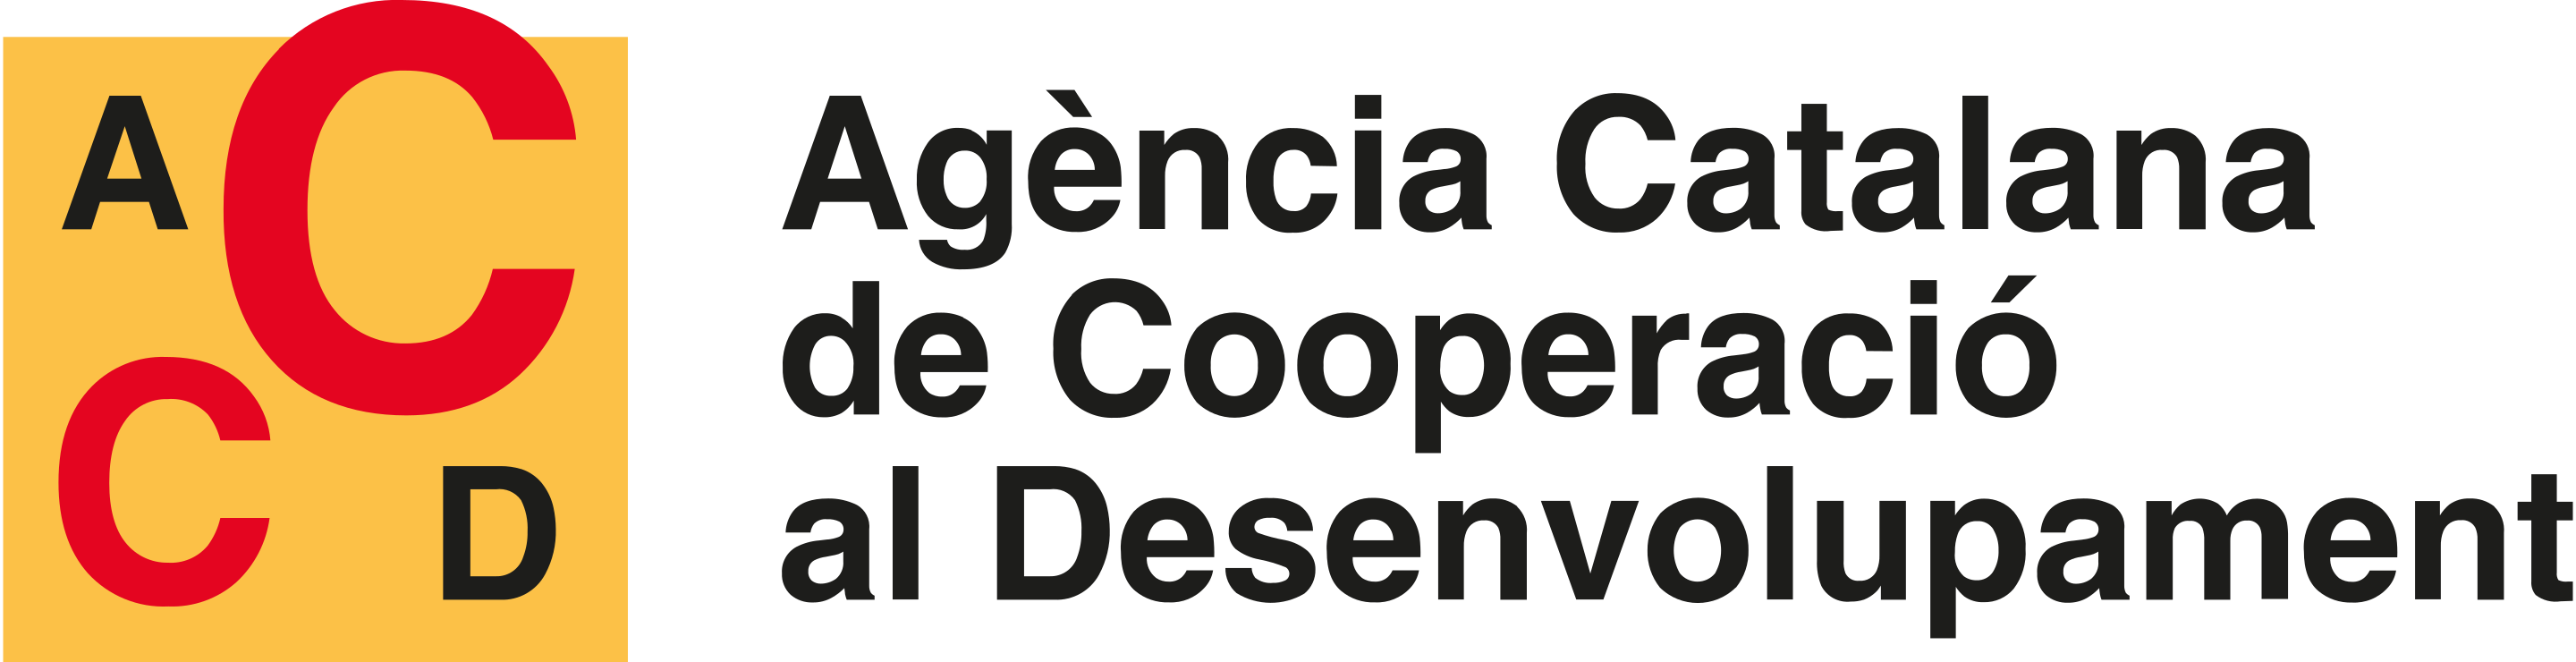 Agencia Catalana de Cooperacio al Desenvolupament.svg